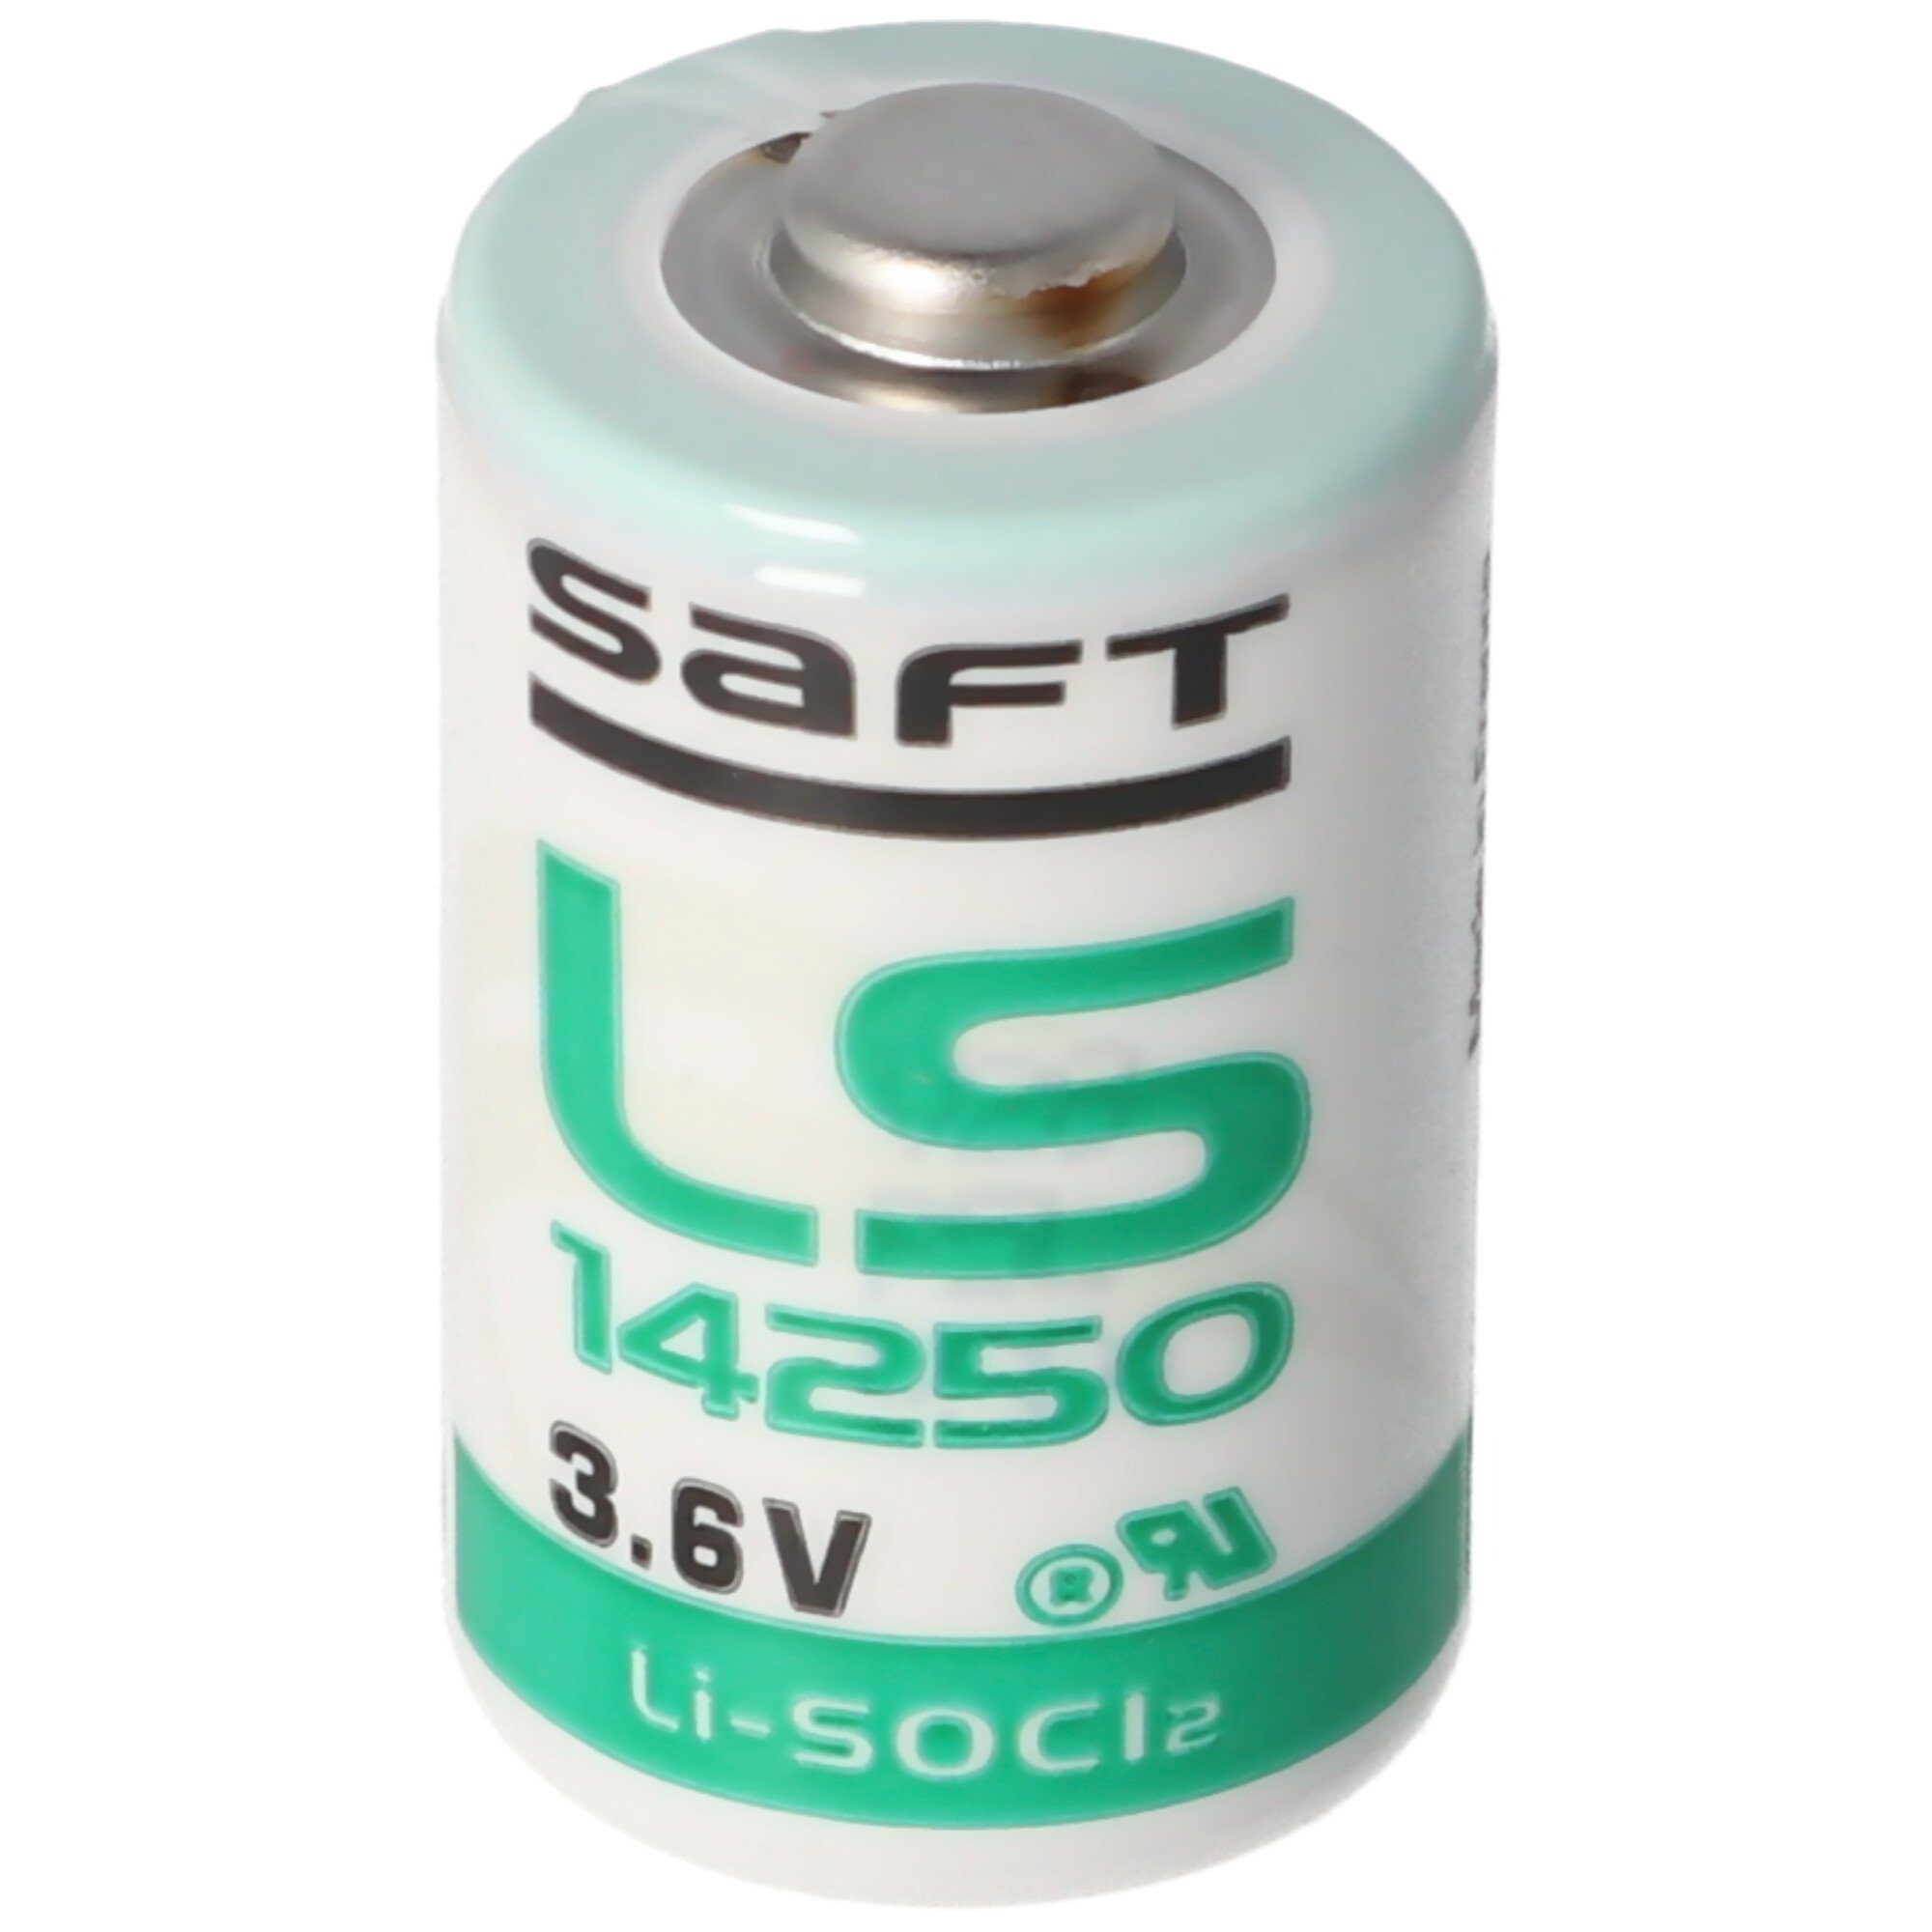 1/2 Li-SOCI2, AA LST14250 SAFT Saft Batterie V) (3,6 Lithium Size LS14250 Batterie,